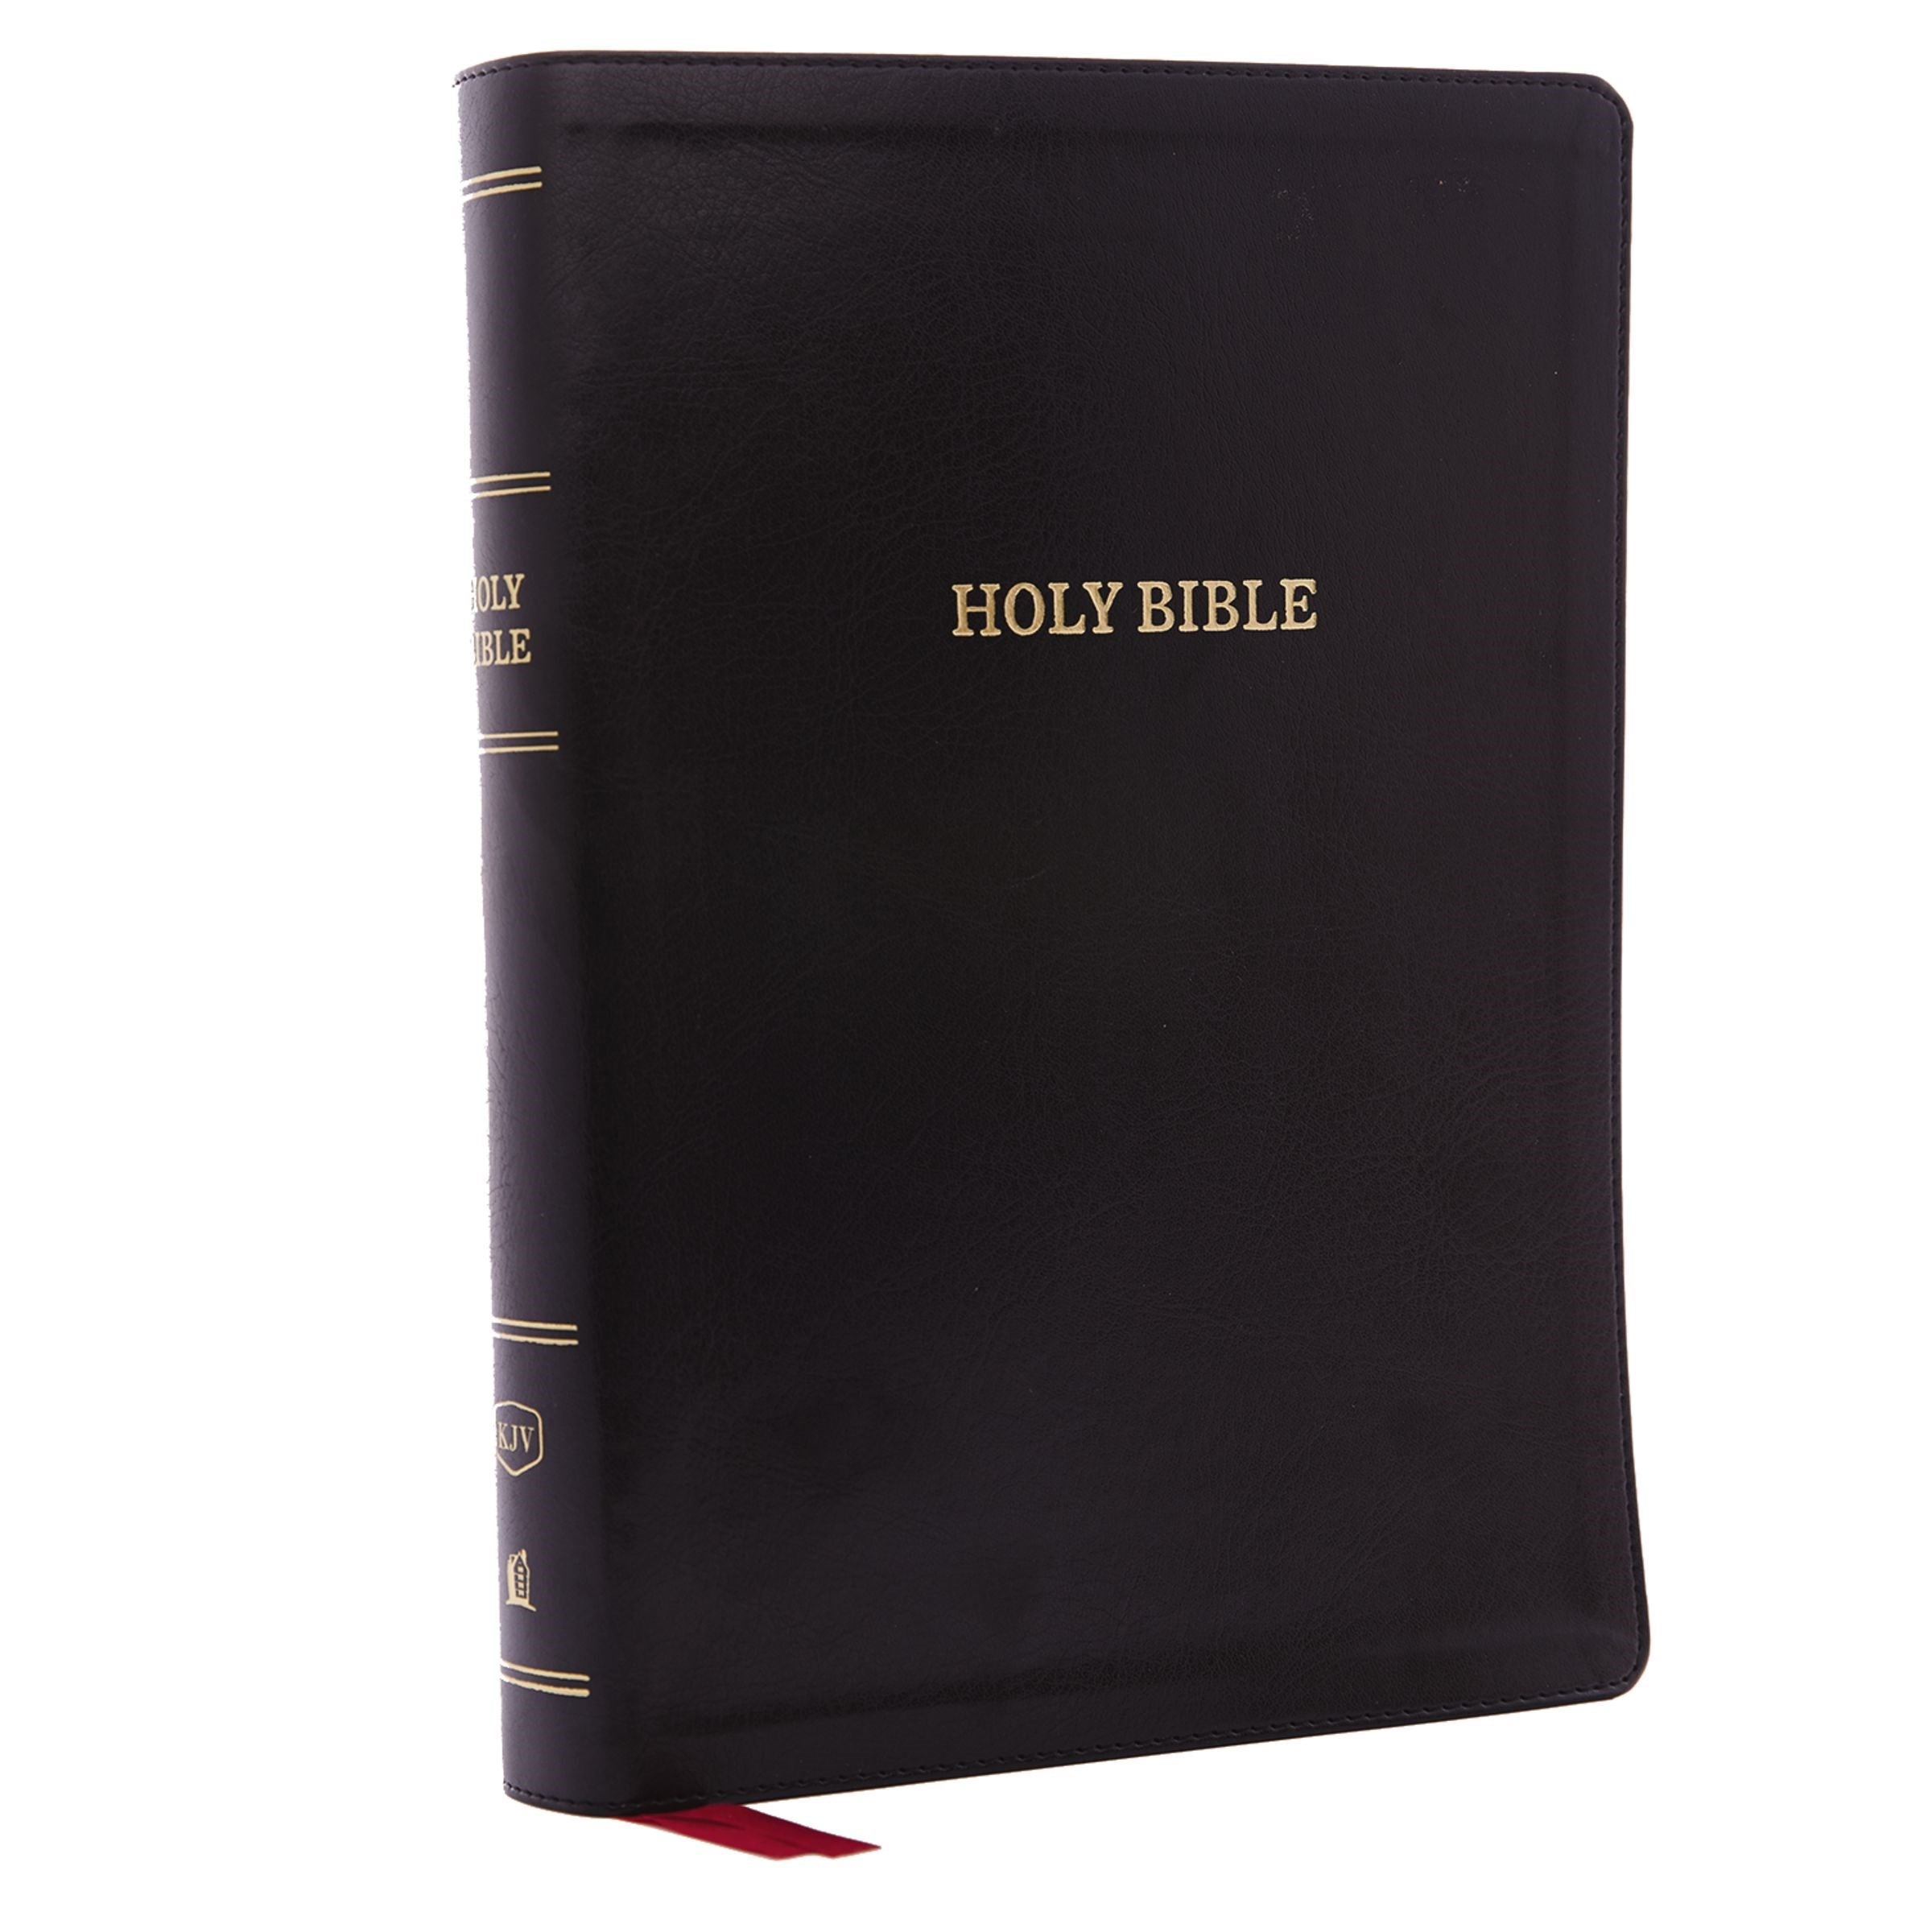 KJV Holy Bible, Super Giant Print Reference Bible, Deluxe Black Leathersoft, 43,000 Cross References, Red Letter, Comfort Print: King James Version : King James Version